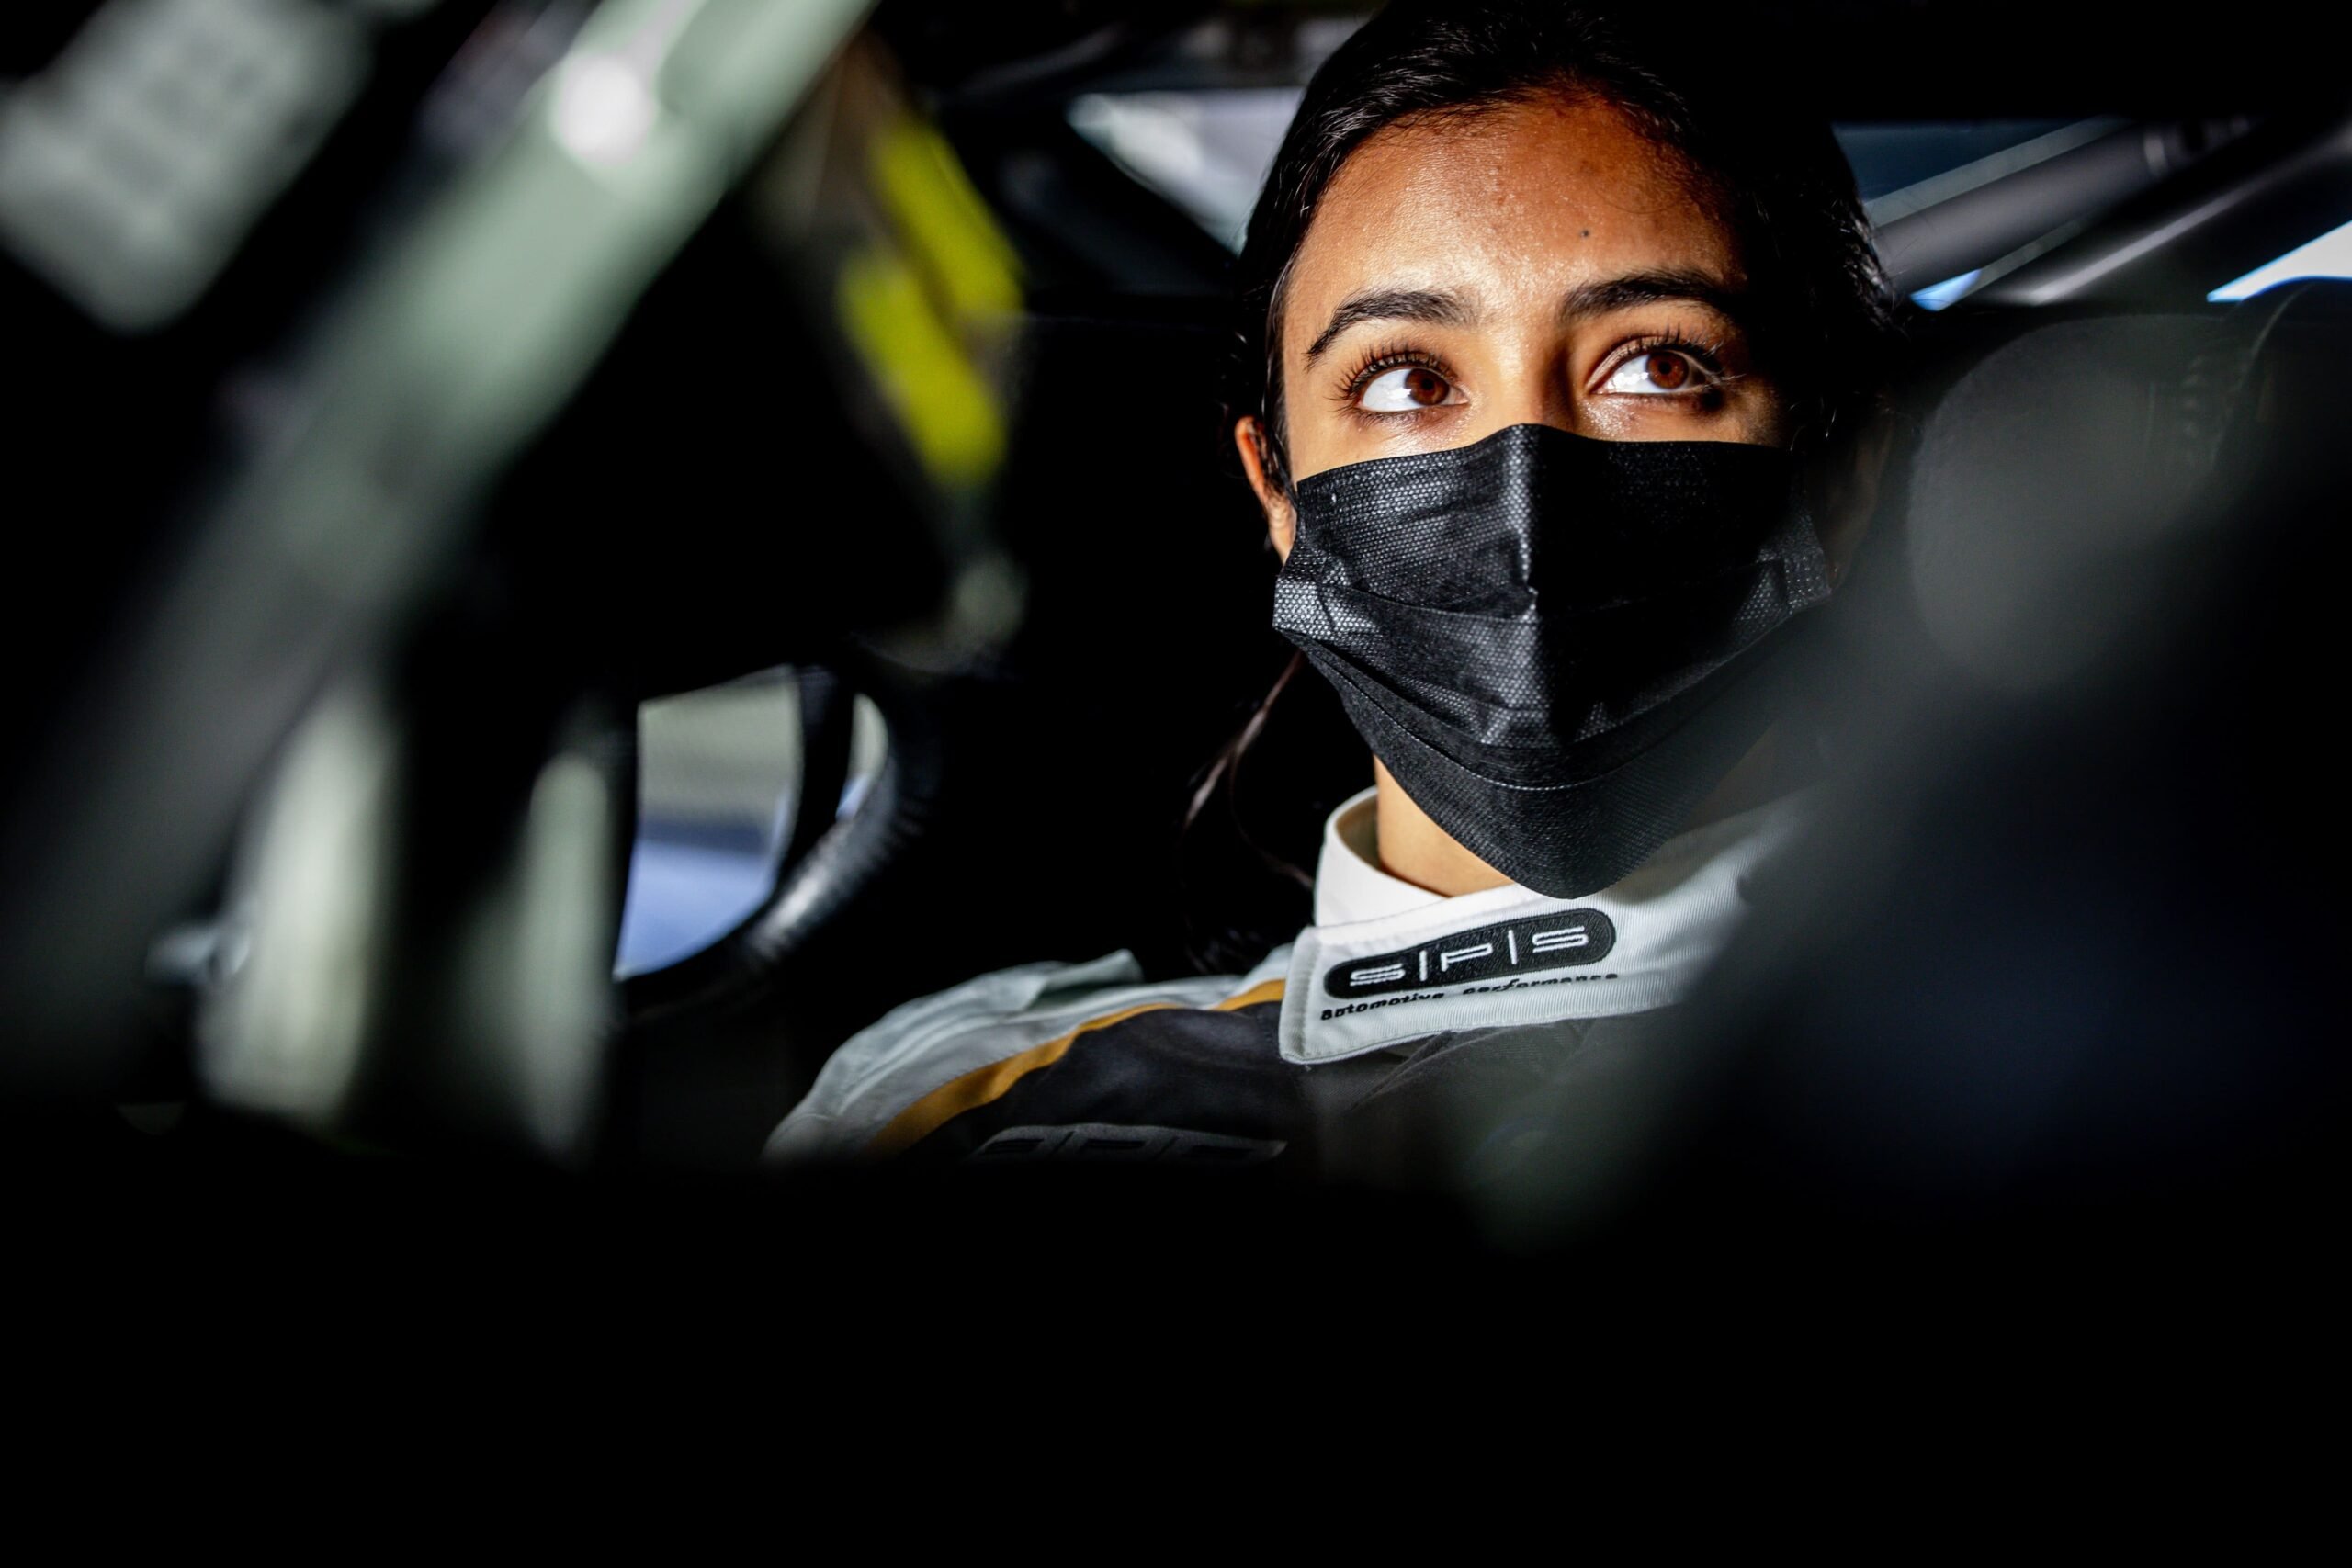 Saudi female racing star Reema Juffali, looking forward to competing in her first full season in a GT3 series